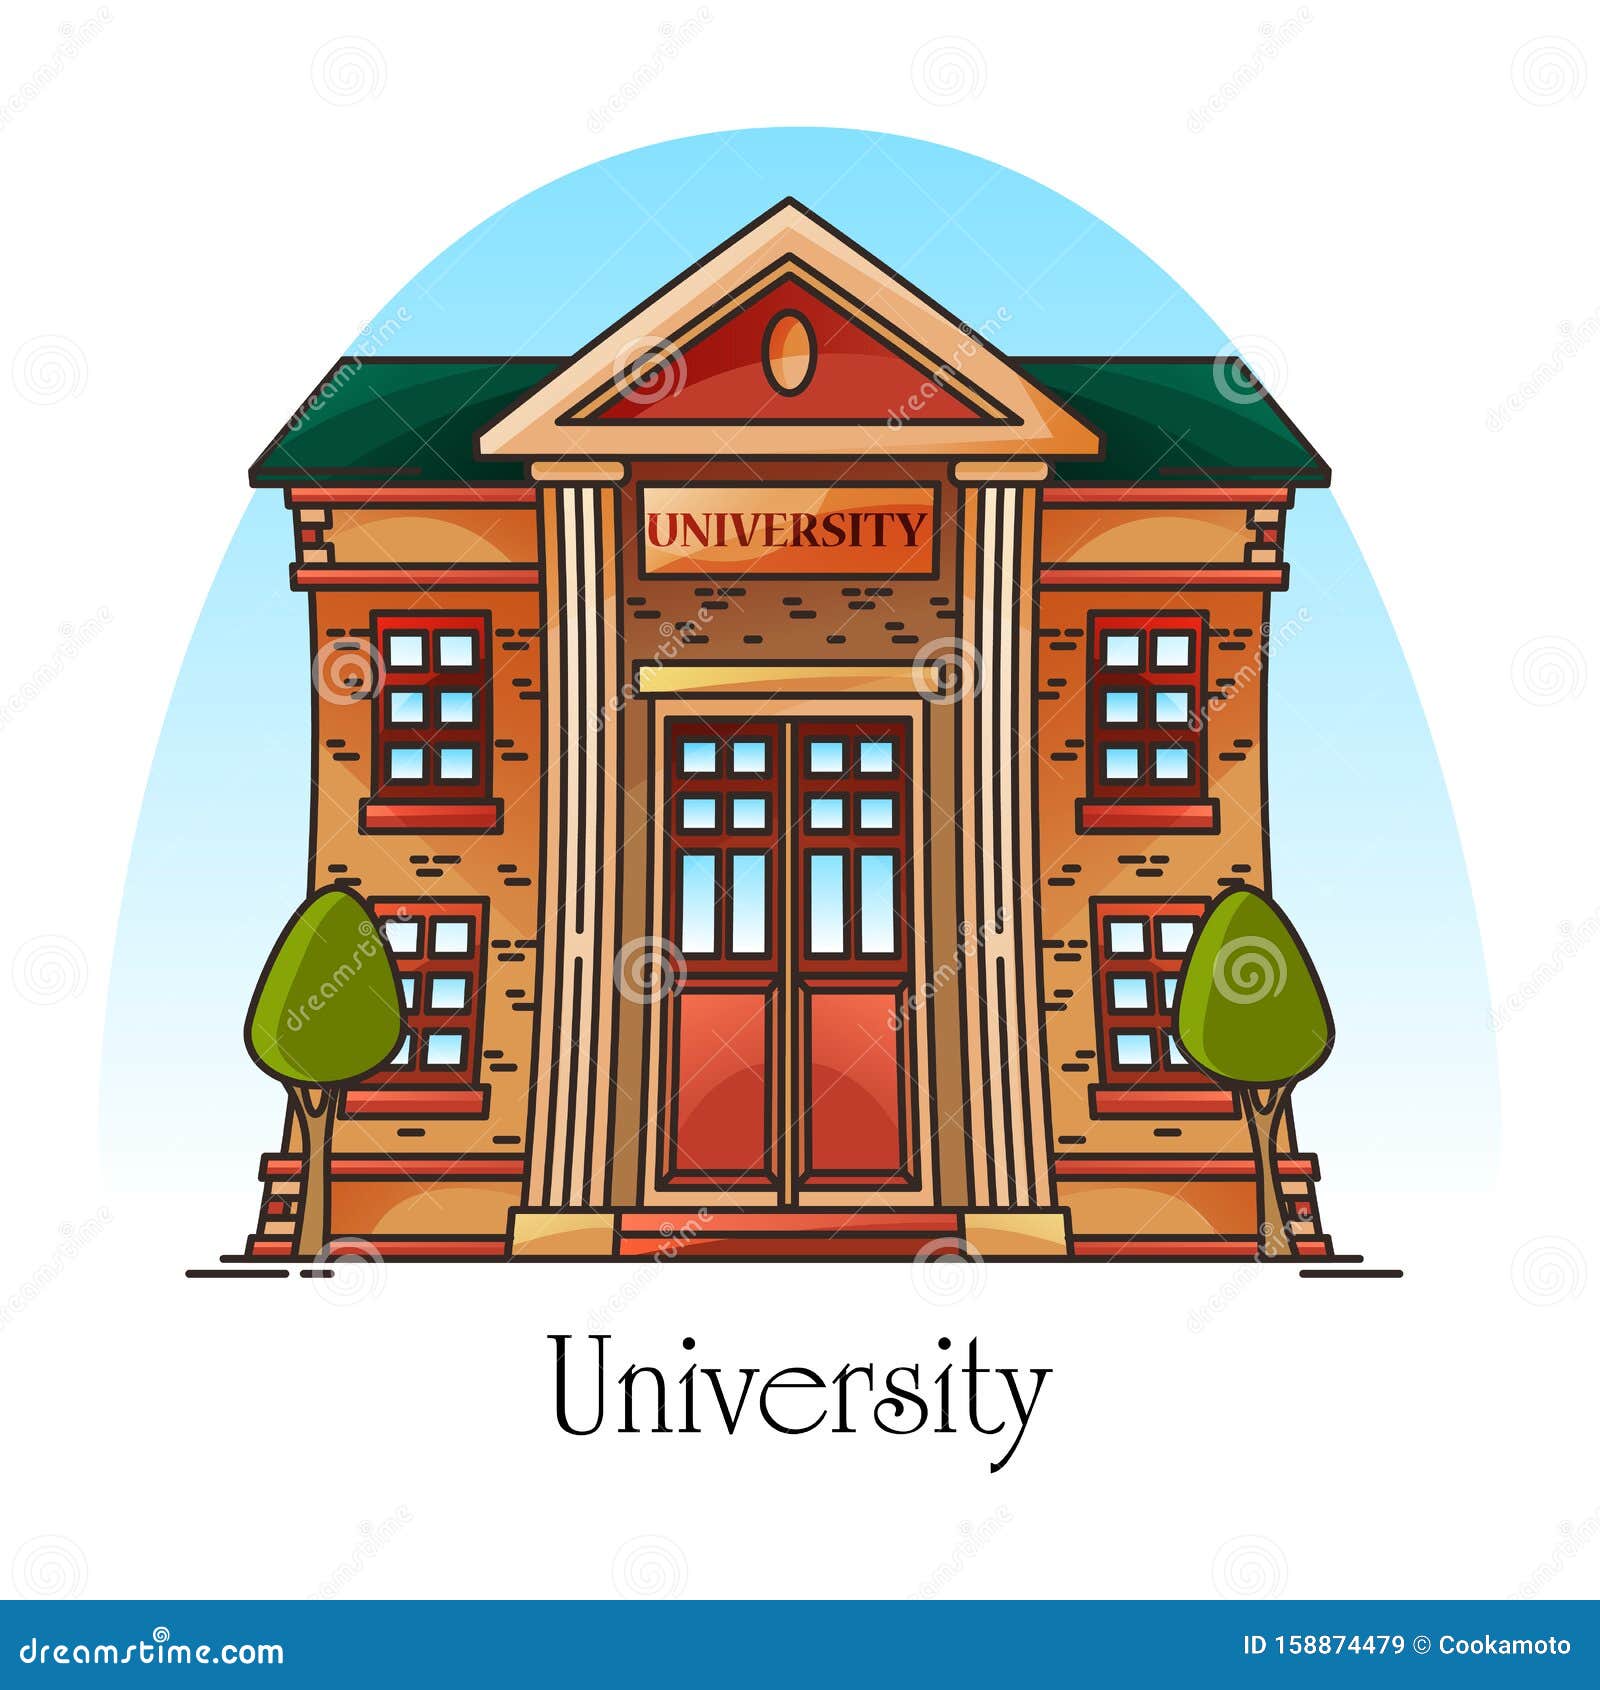 University Or College Building Cartoon Vector | CartoonDealer.com #57819361